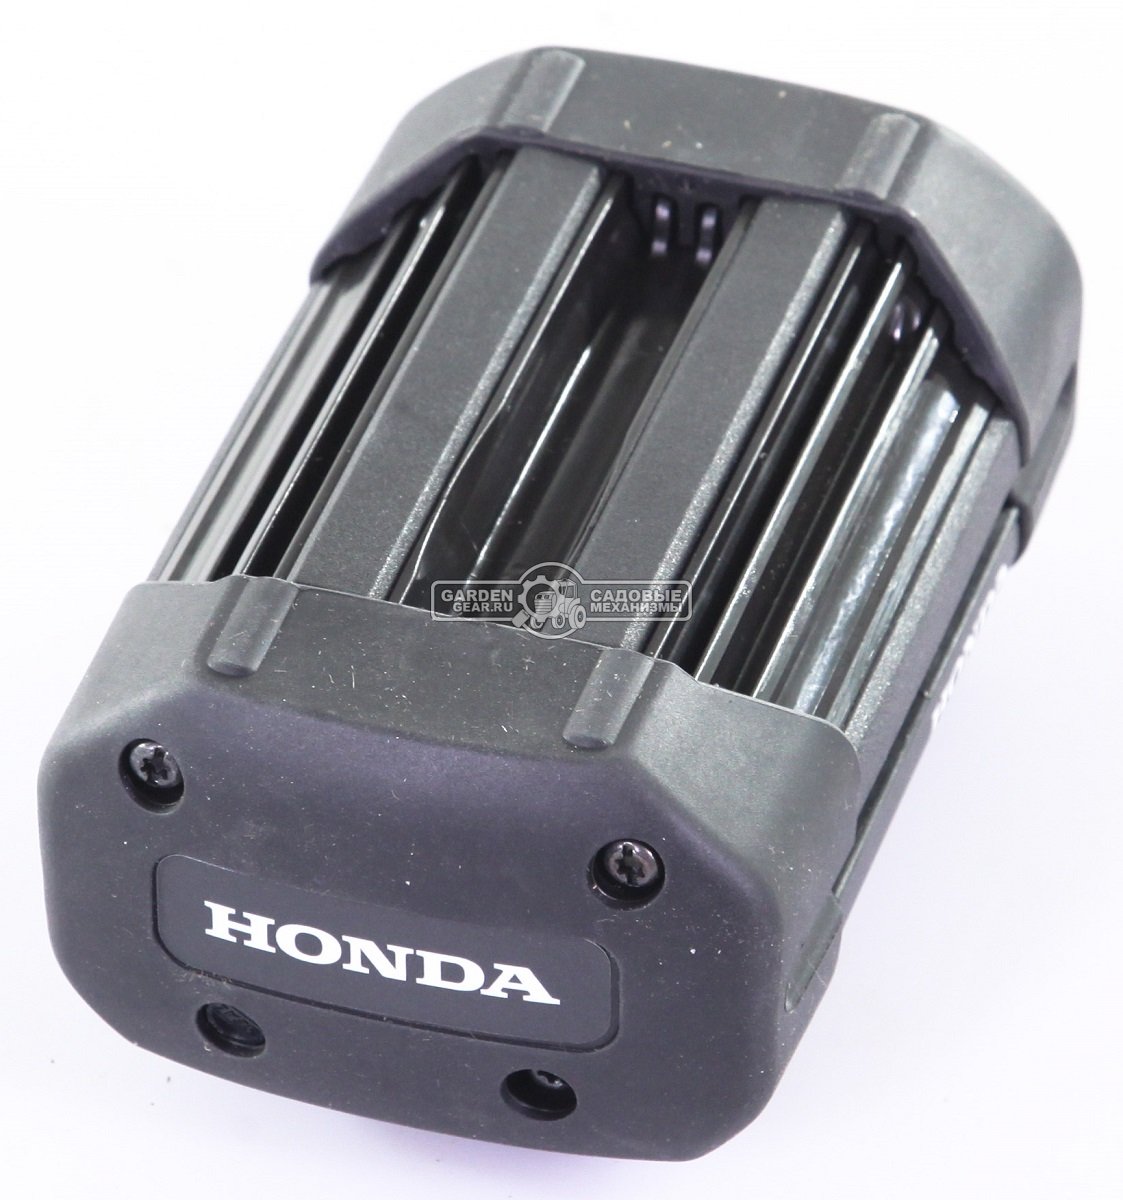 Аккумулятор Honda DP 3660 XAE (PRC, Li-ion, 36В, 6 А/ч., 1,3 кг.)